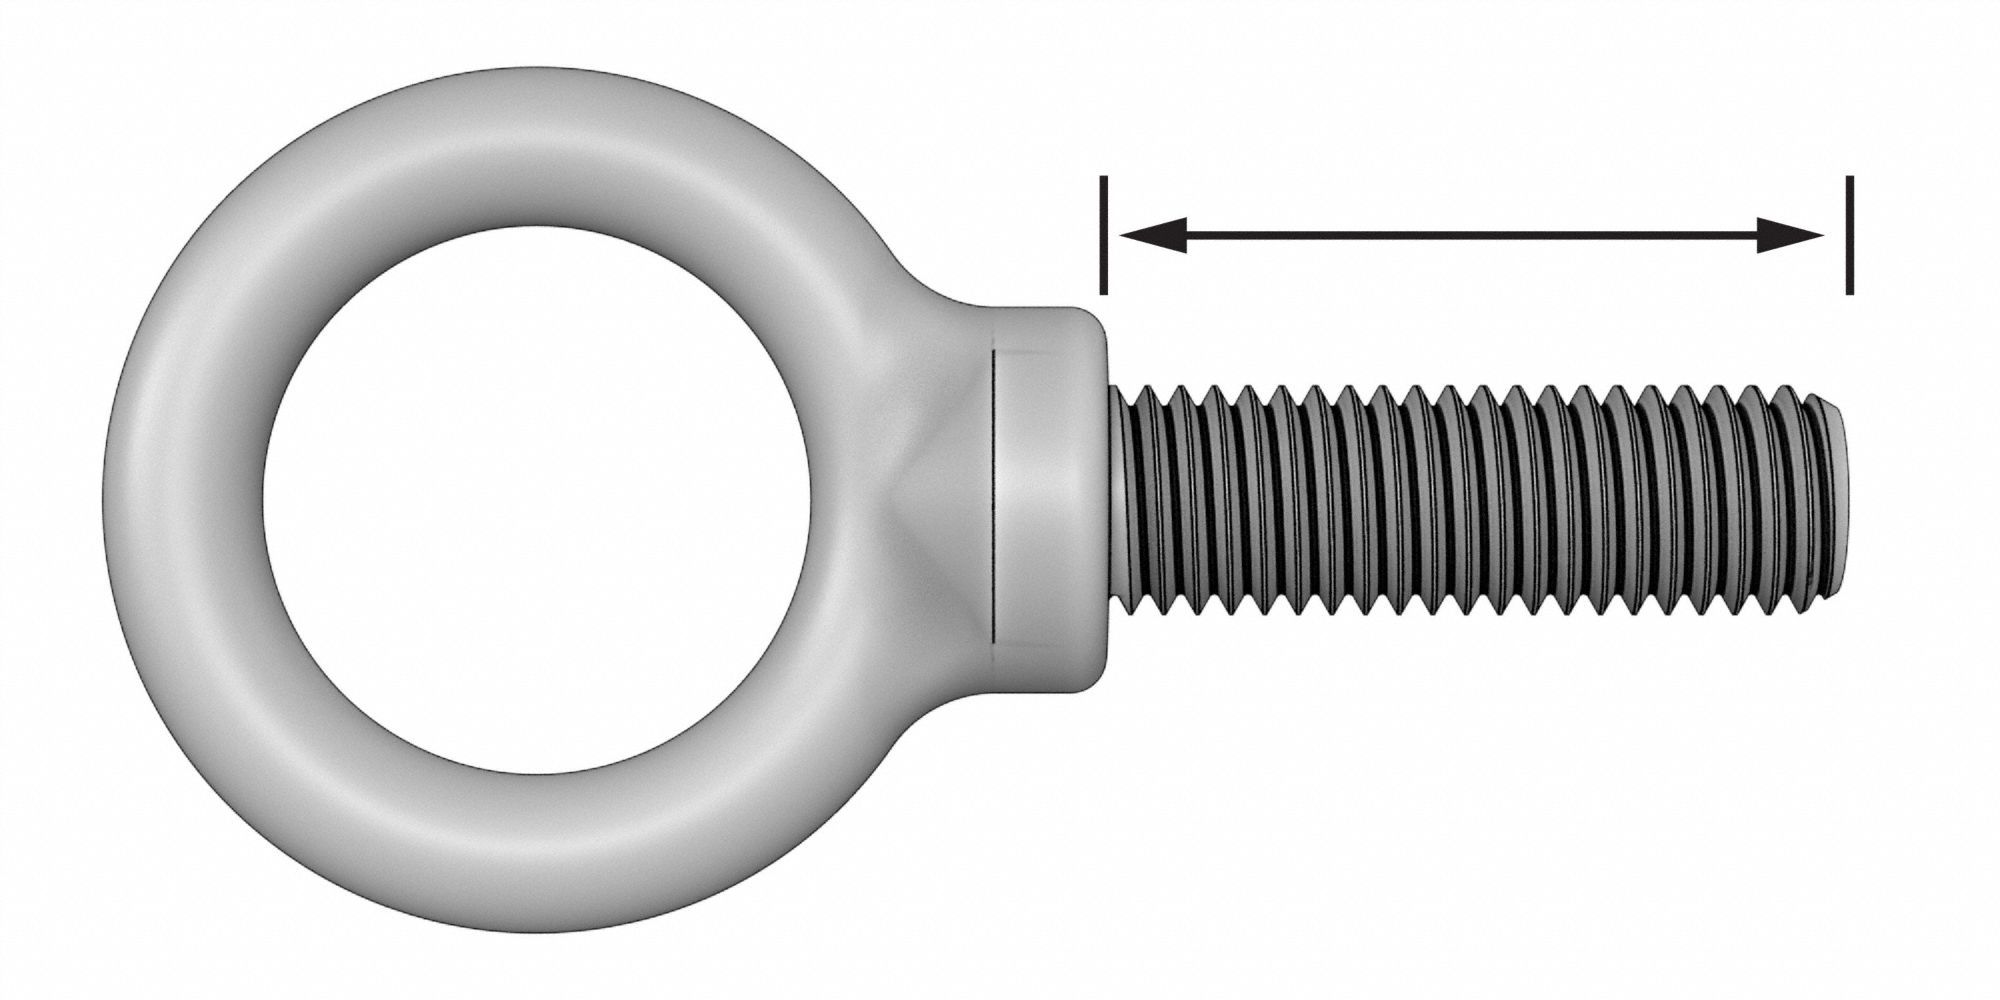 Buy Eyelet screw with wood screw thread, zinc plated online